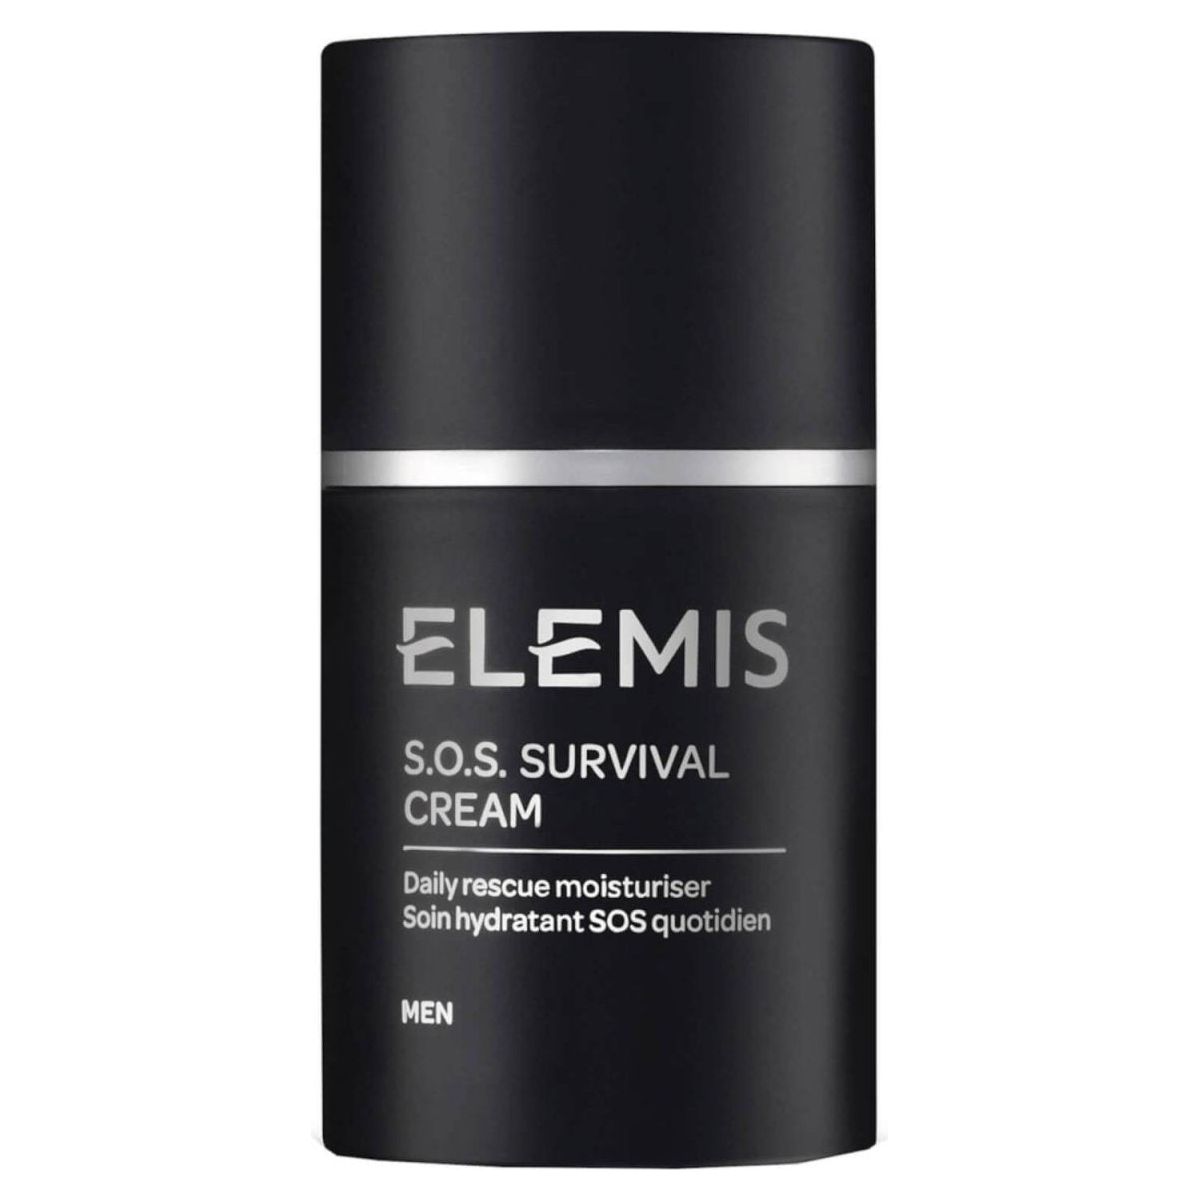 Elemis TFM S.O.S. Survival Cream 50 ml - DG International Ventures Limited